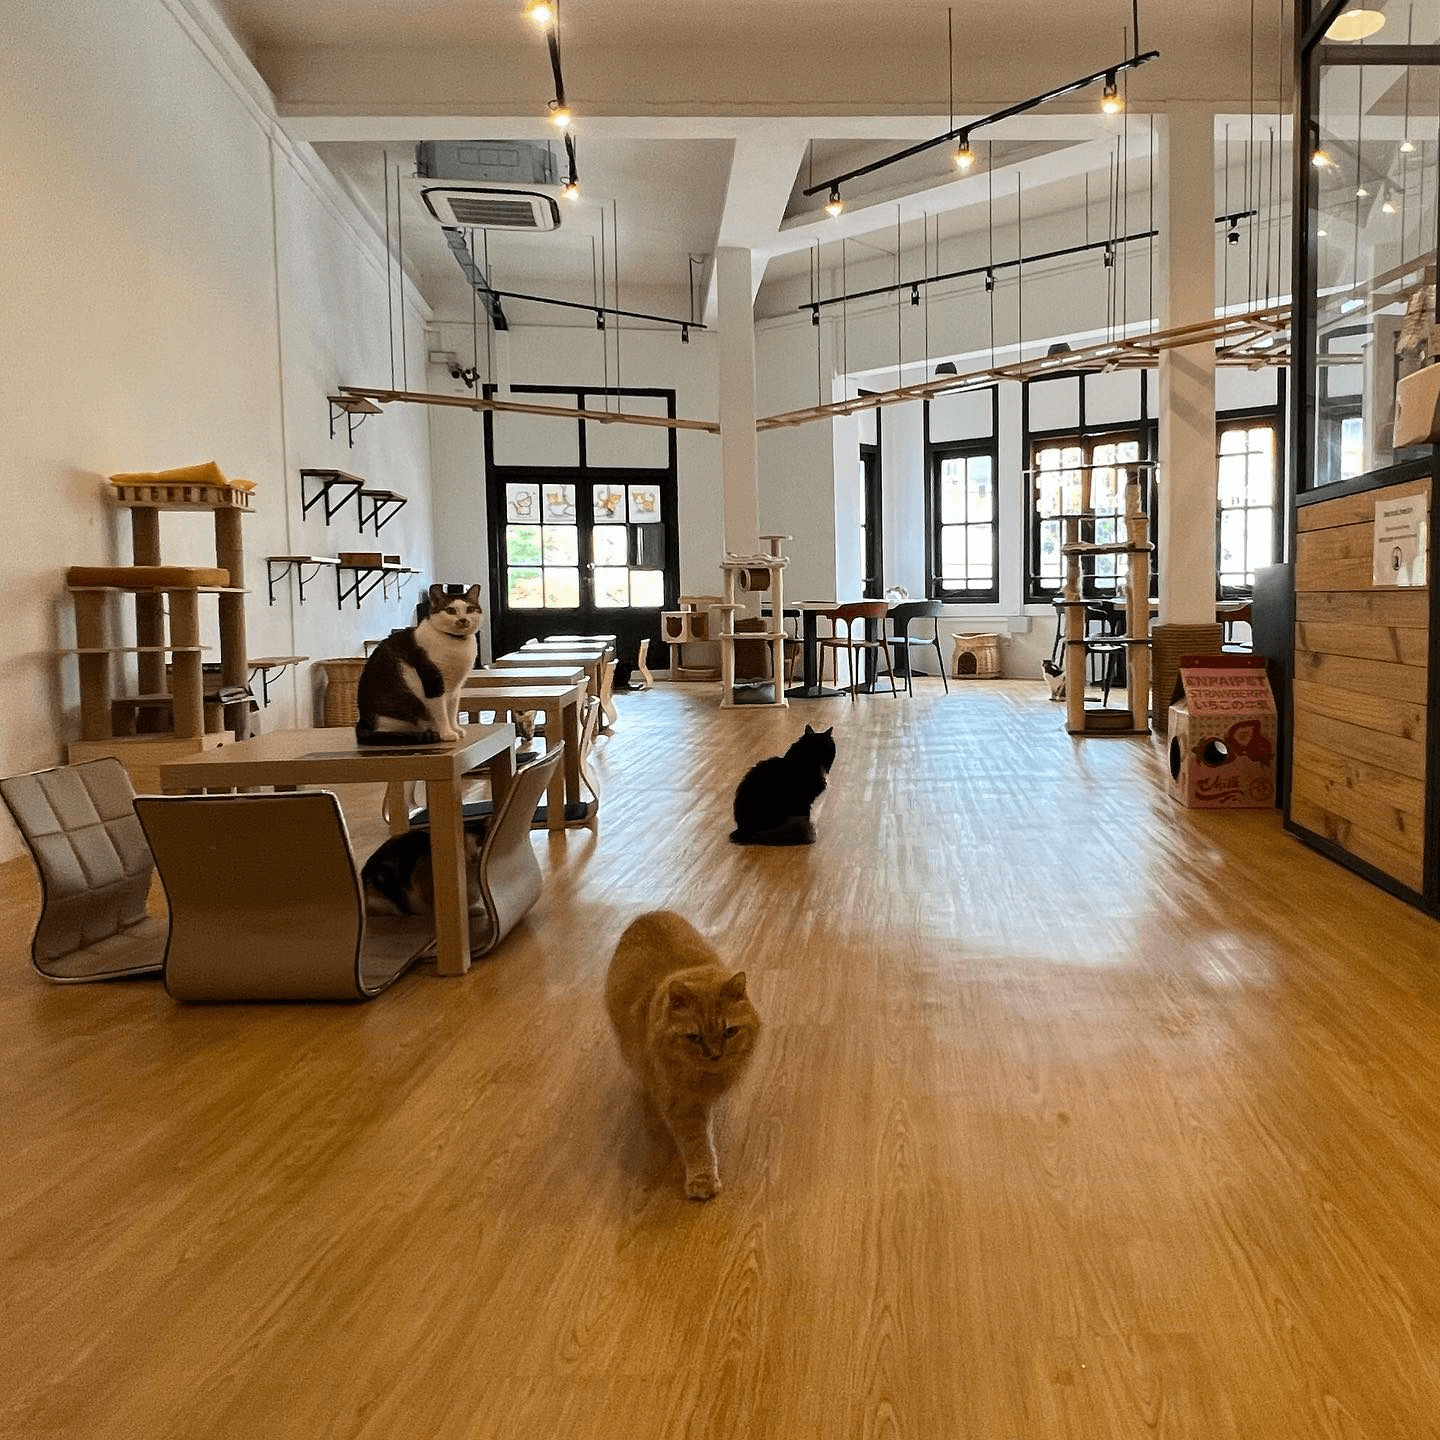 The Cat Café at Bugis - interior